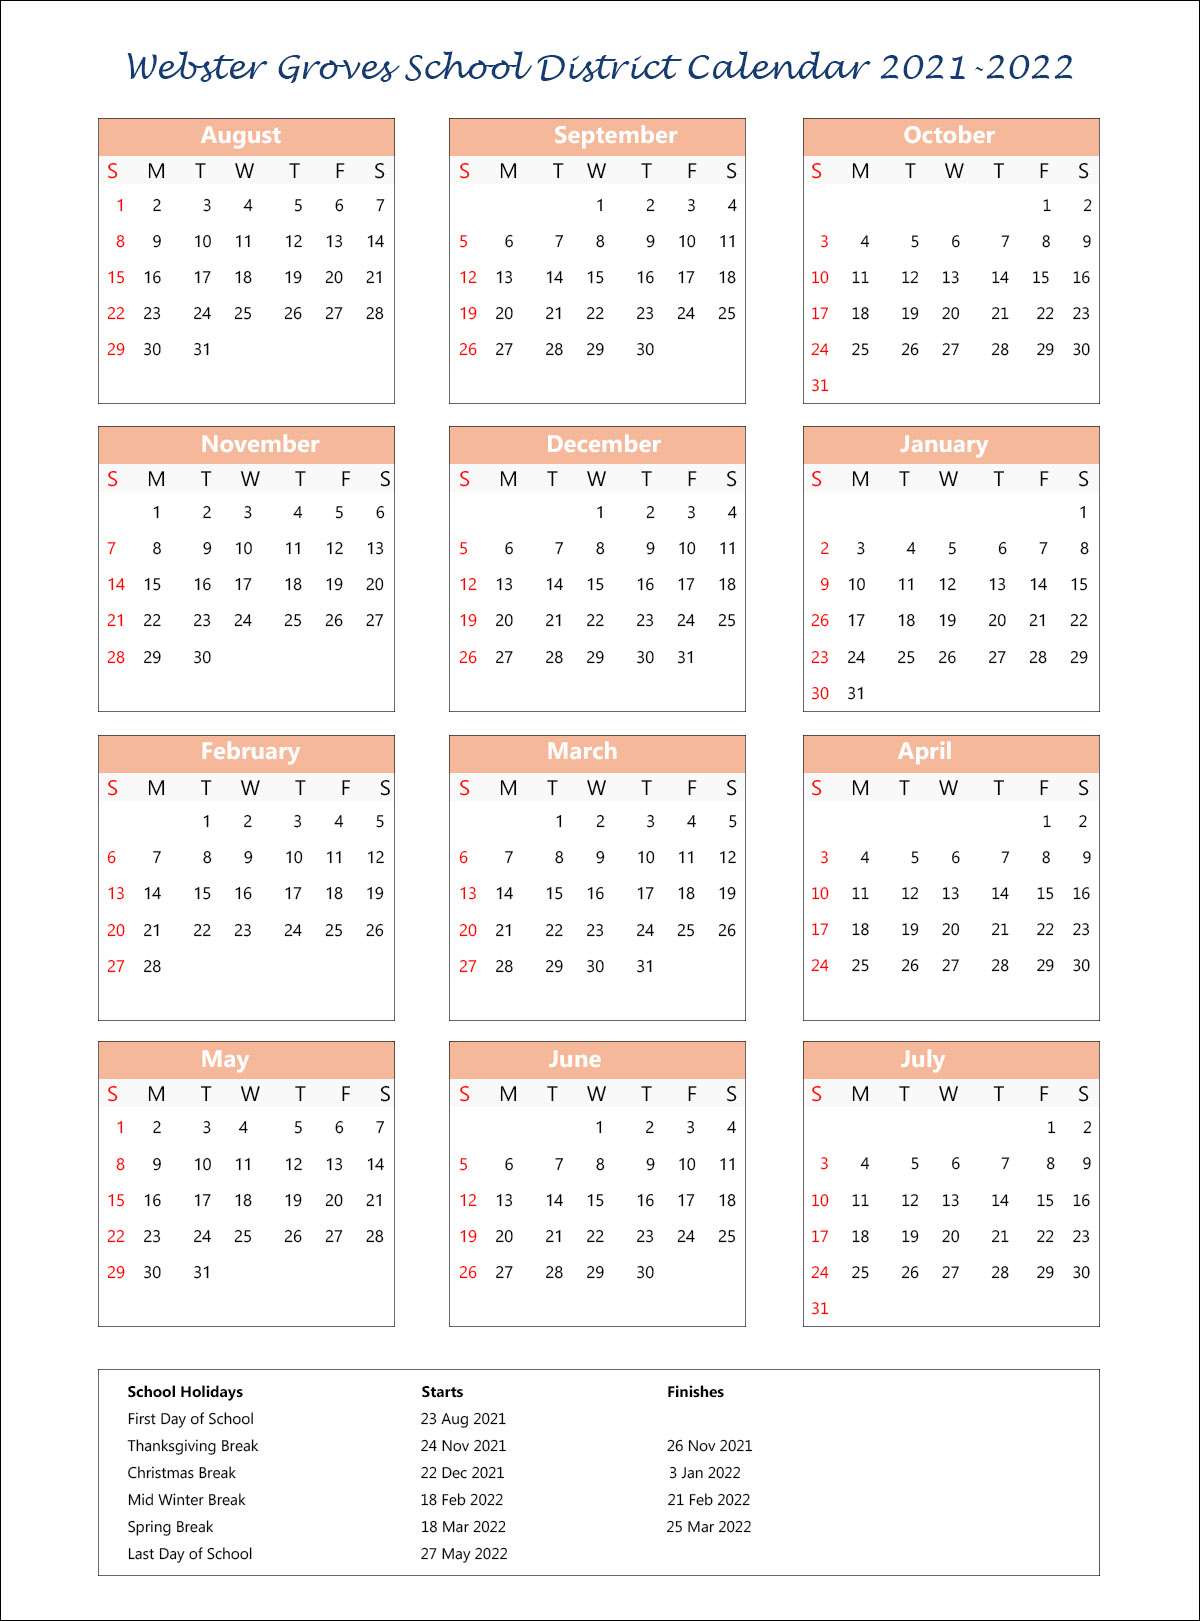 Webster Groves School District Calendar 2021